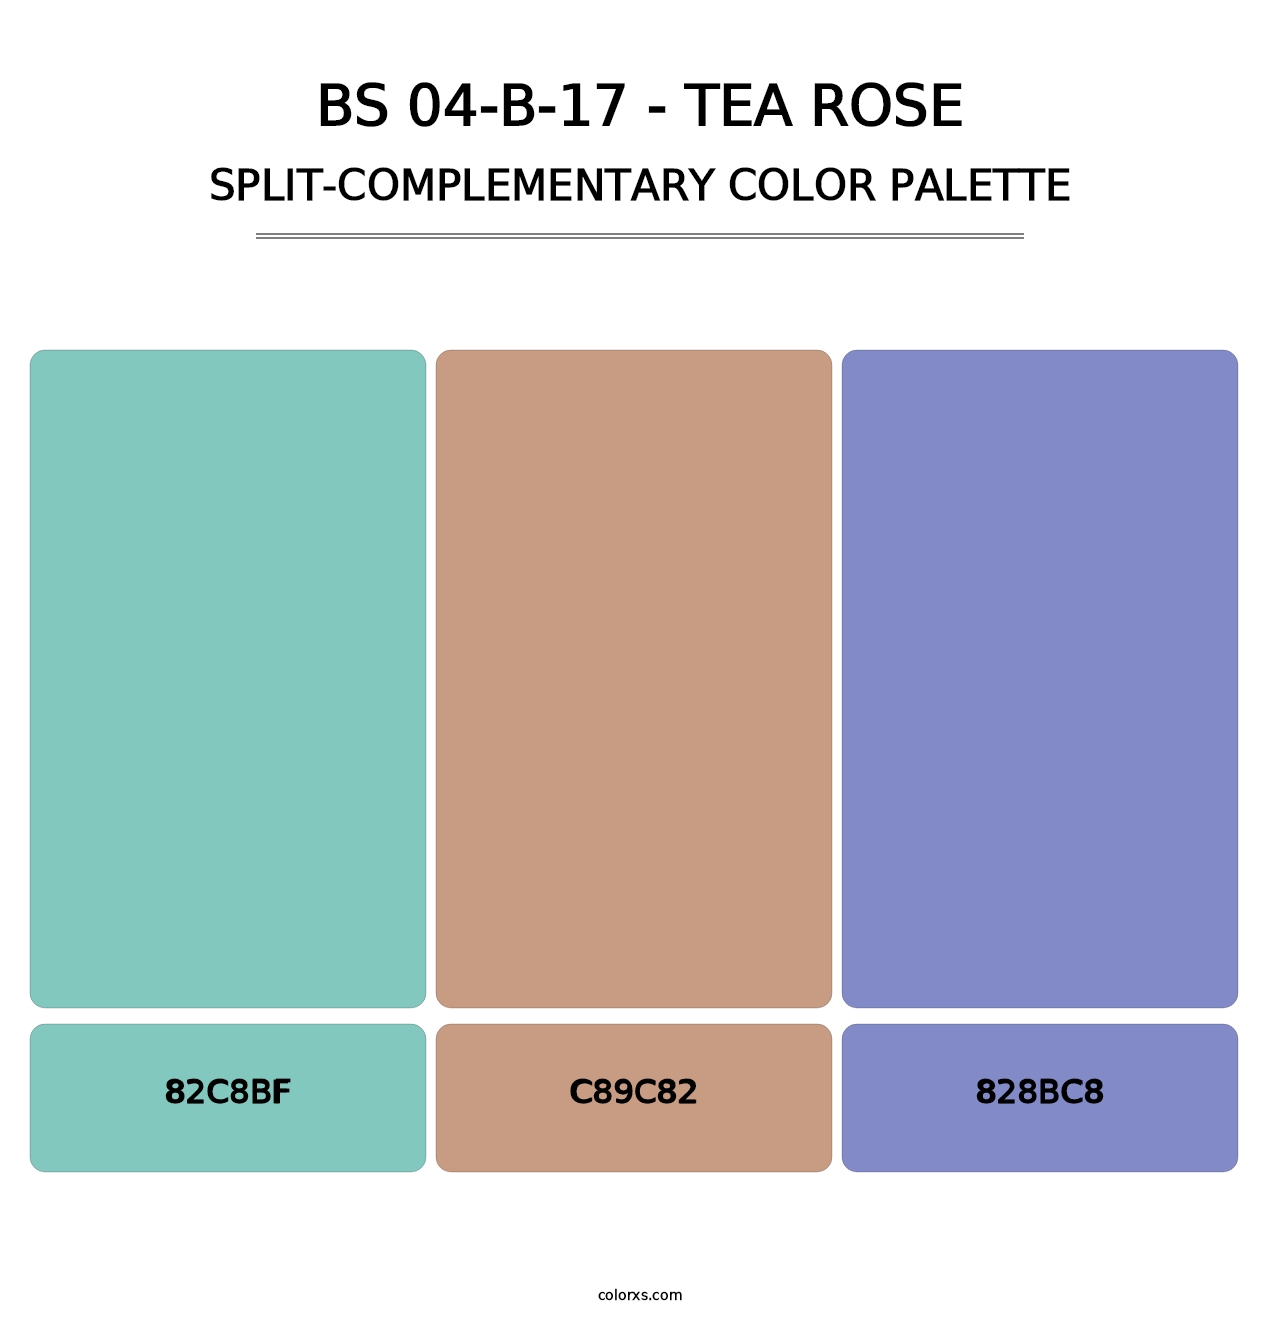 BS 04-B-17 - Tea Rose - Split-Complementary Color Palette